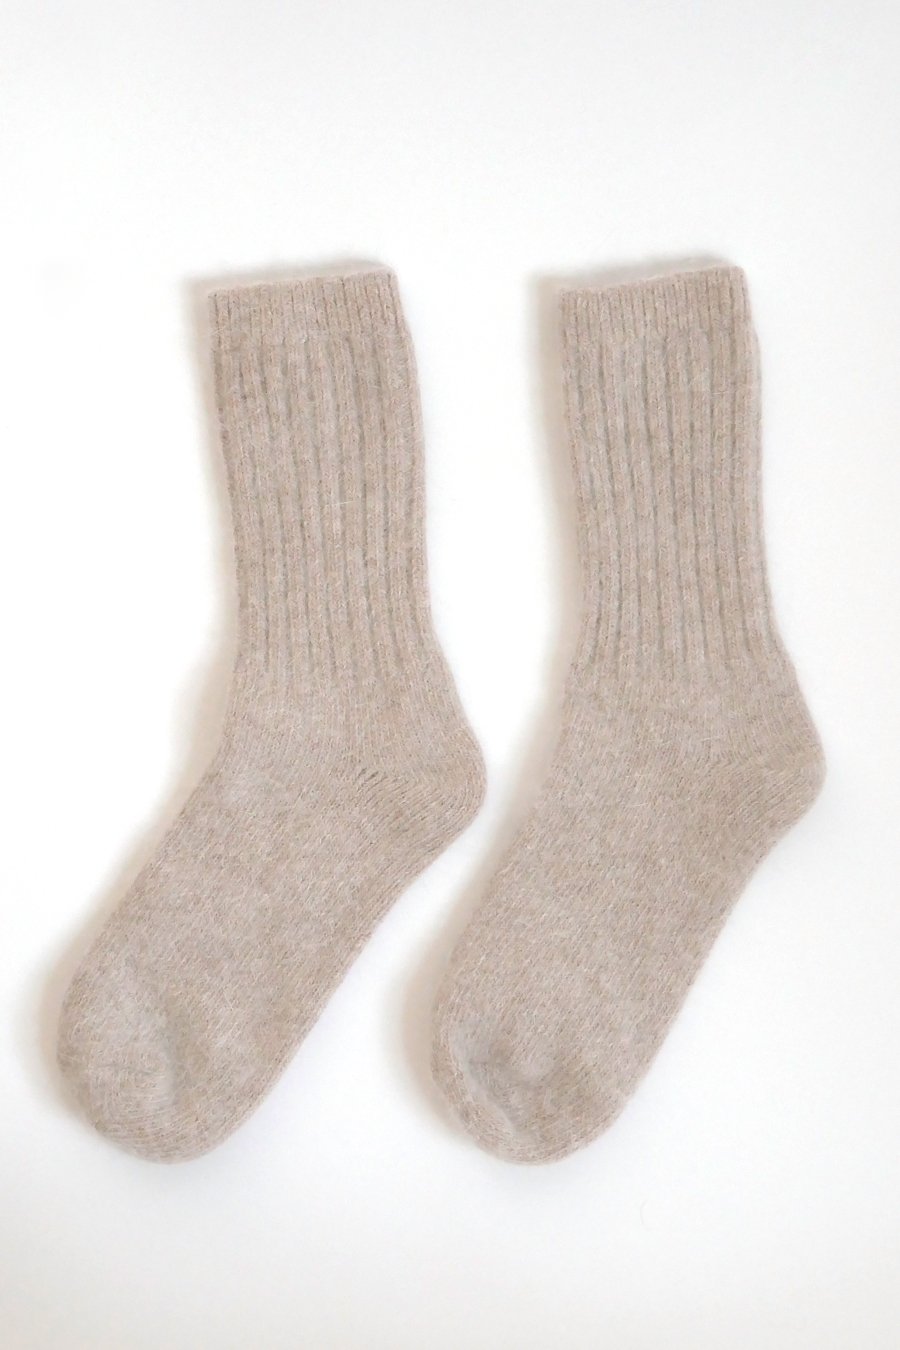 Skies For Miles soft Angora wool socks in beige color